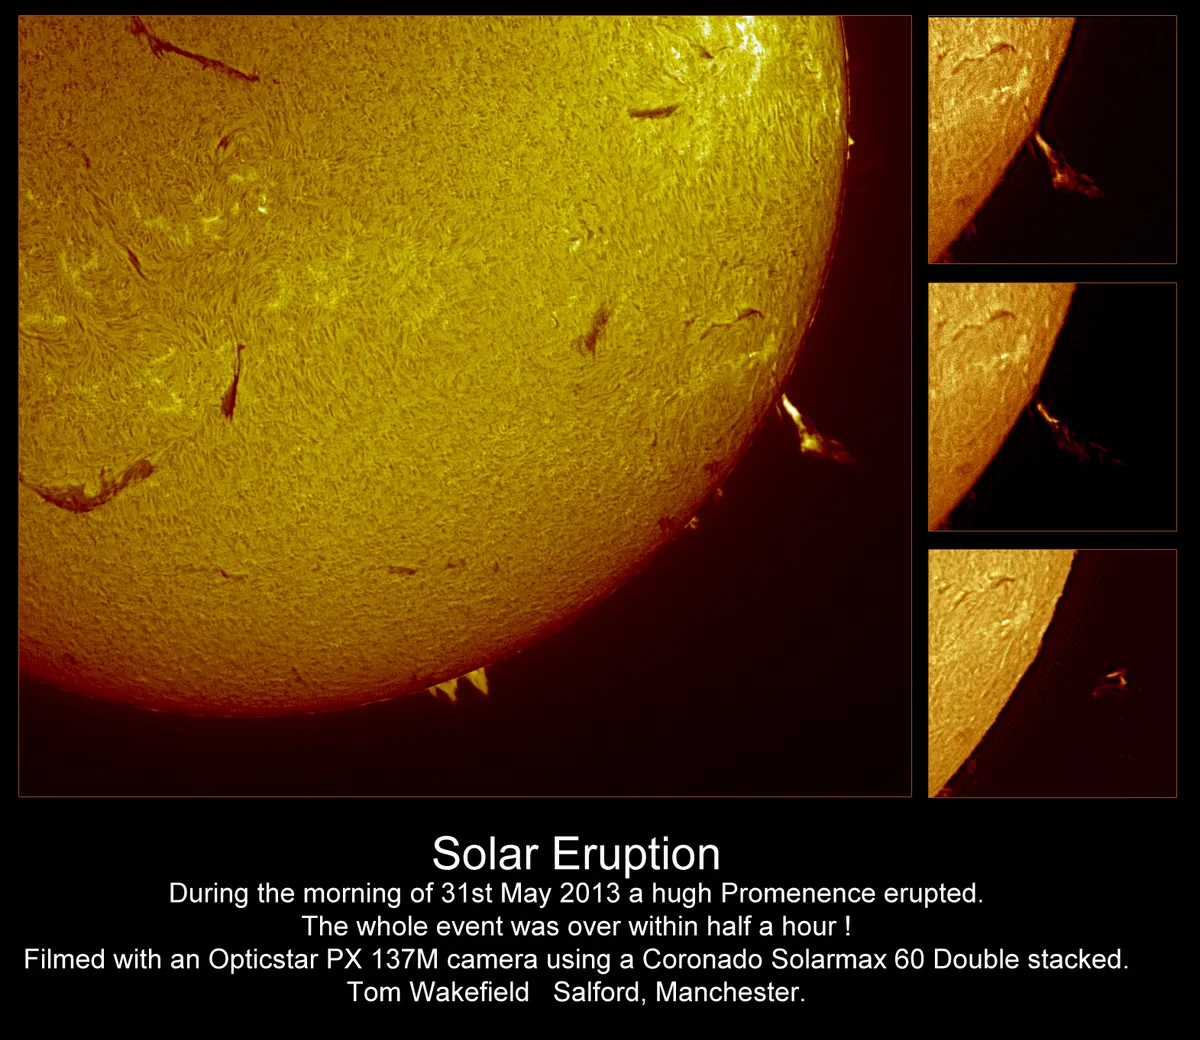 Solar Eruption by Tom Wakefield, Salford, Manchester, UK. Equipment: Opticstar PM 137X, Coronado solarmax 60 Double stacked, 2X barlow, EQ6 mount.